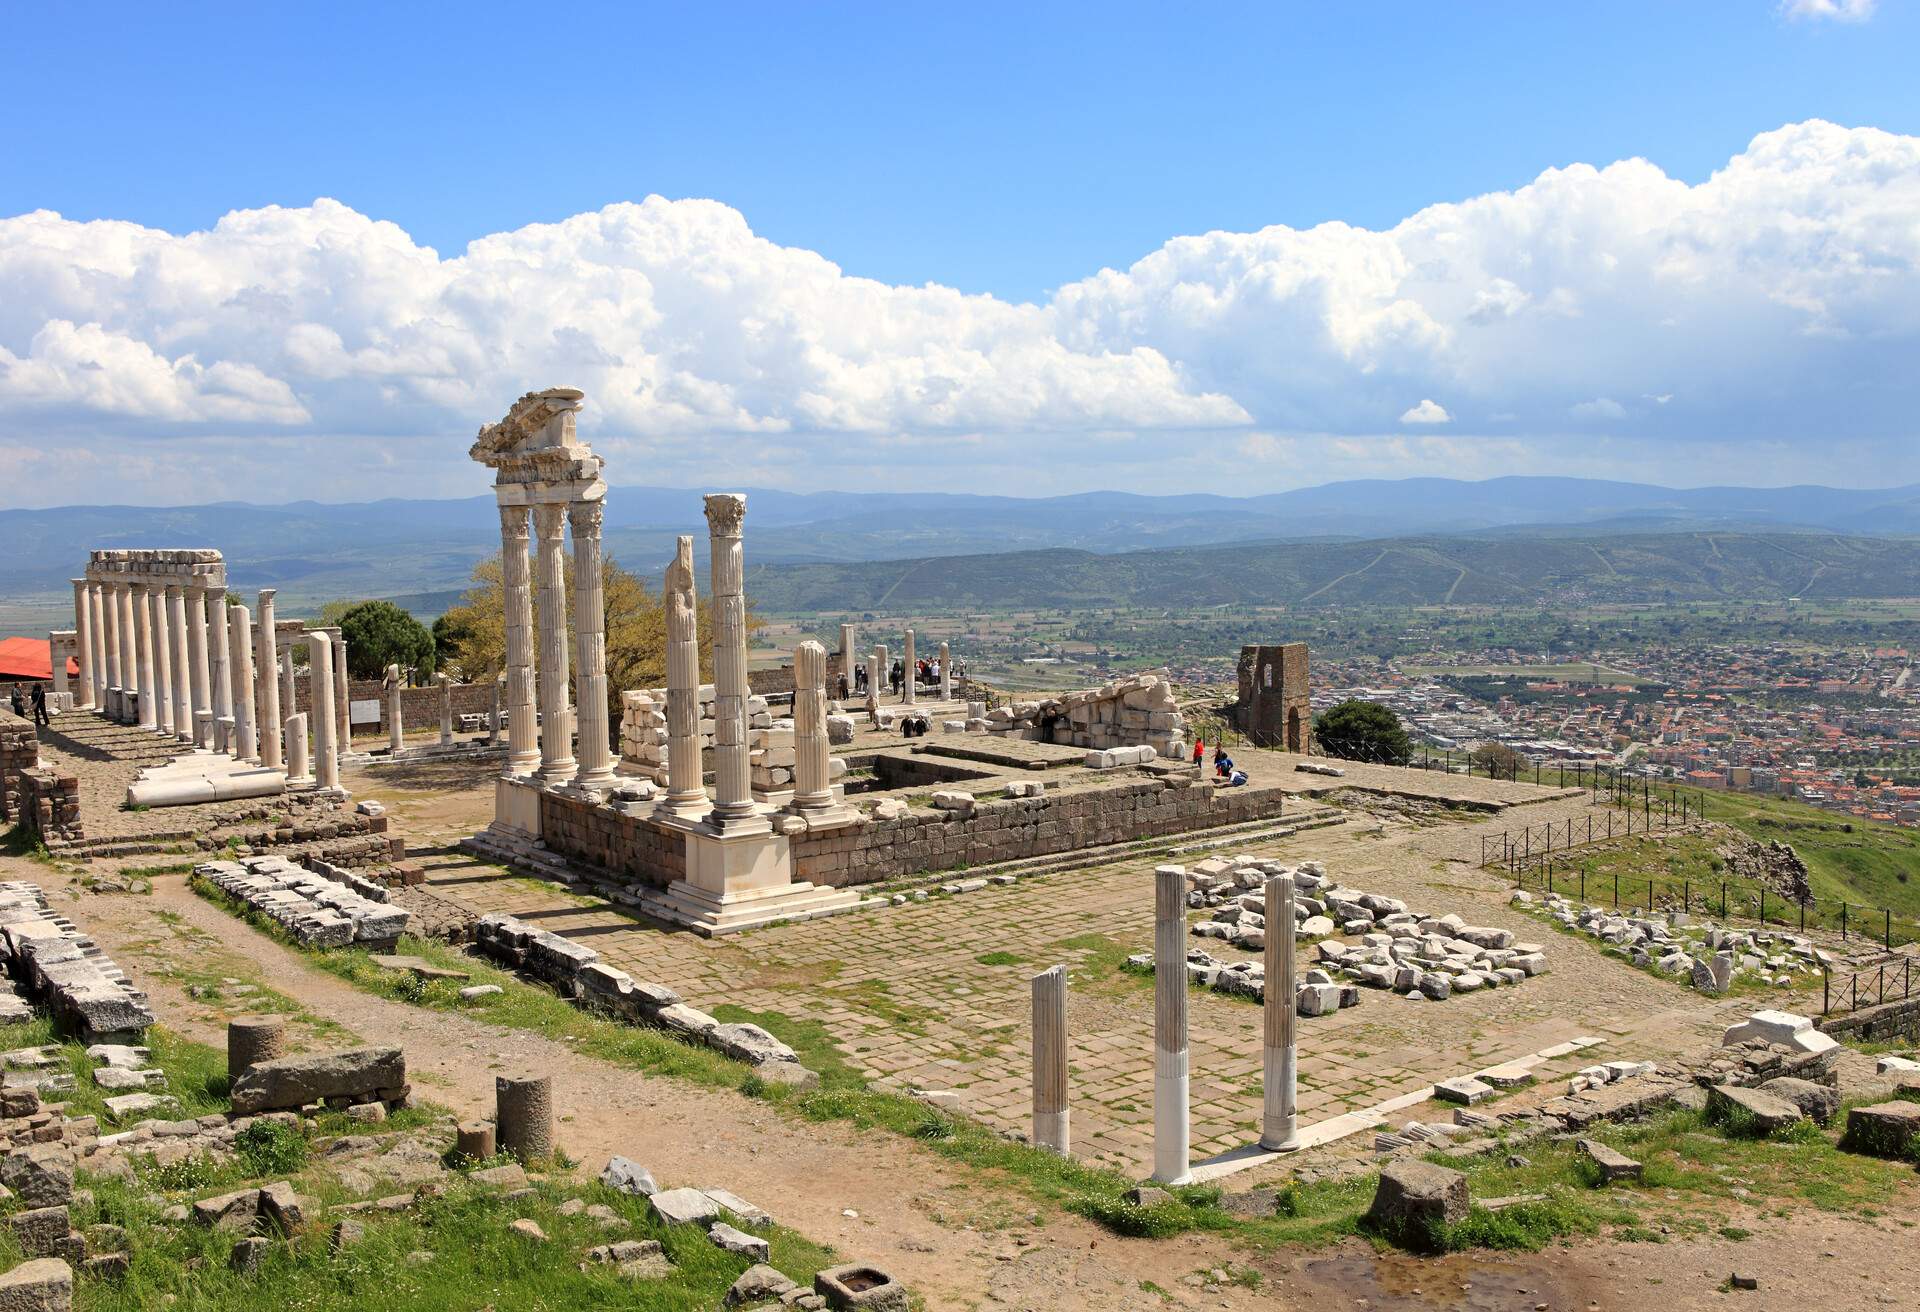 The ancient Temple of Trajan at Pergamos